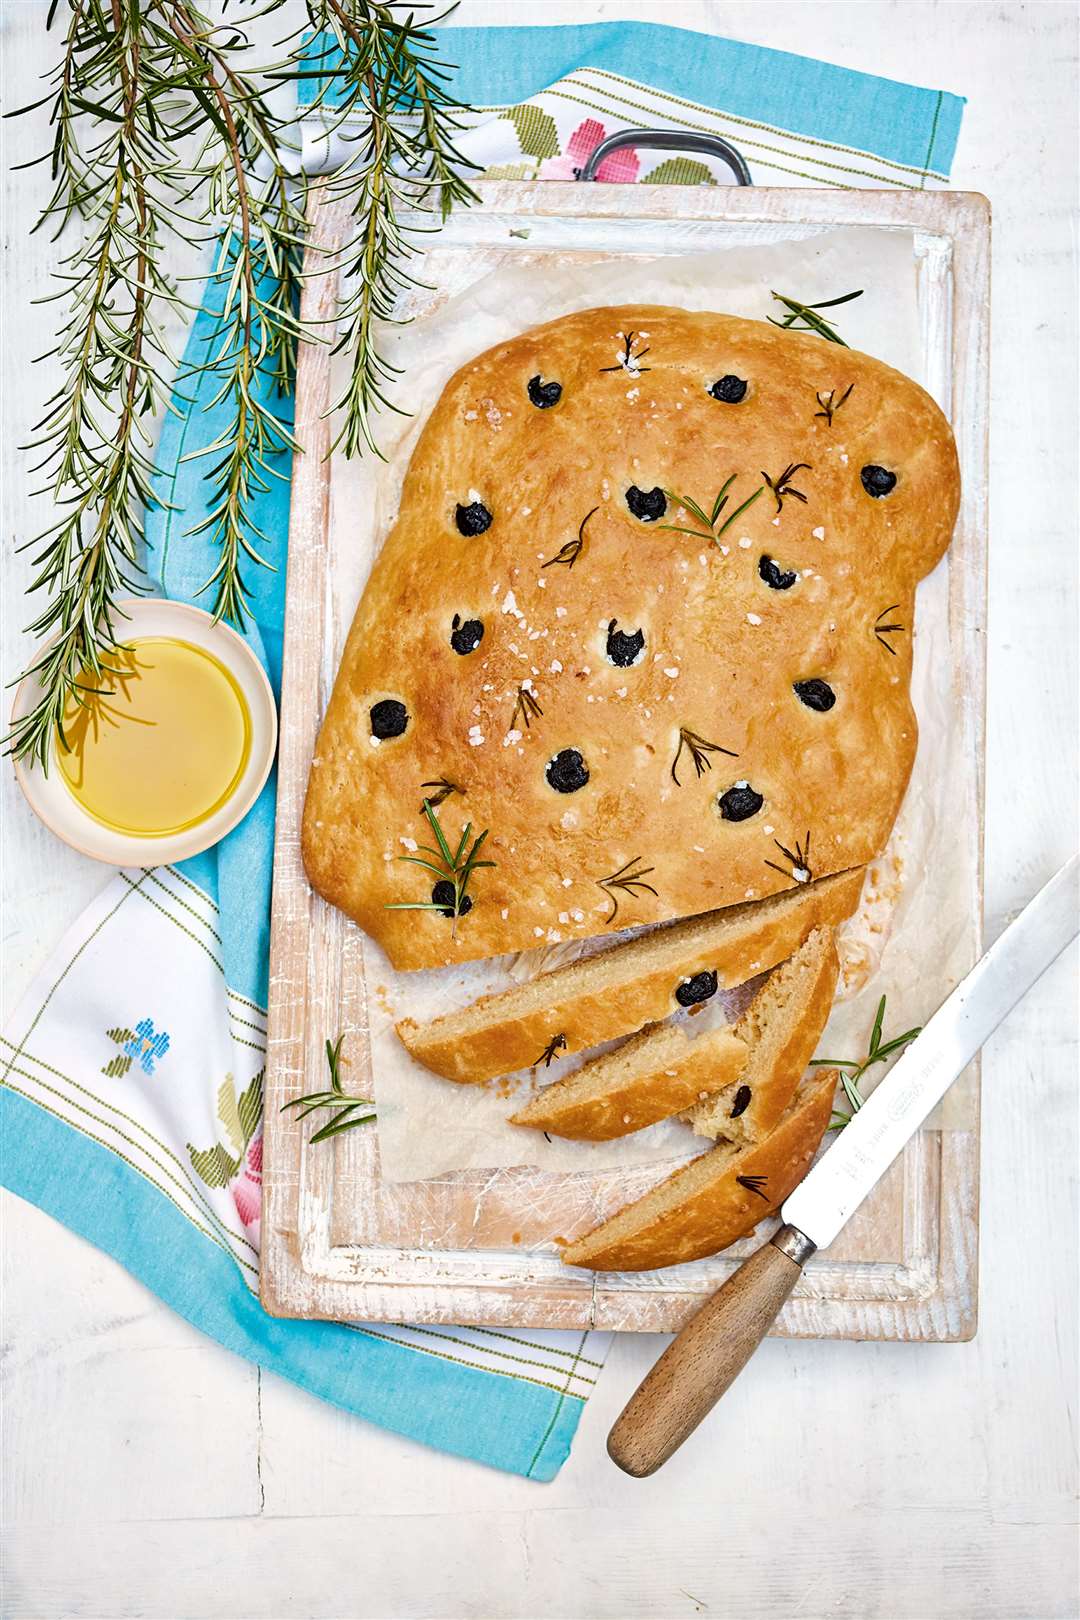 Irini Tzortzoglou's olive and rosemary bread. Picture: David Loftus/PA